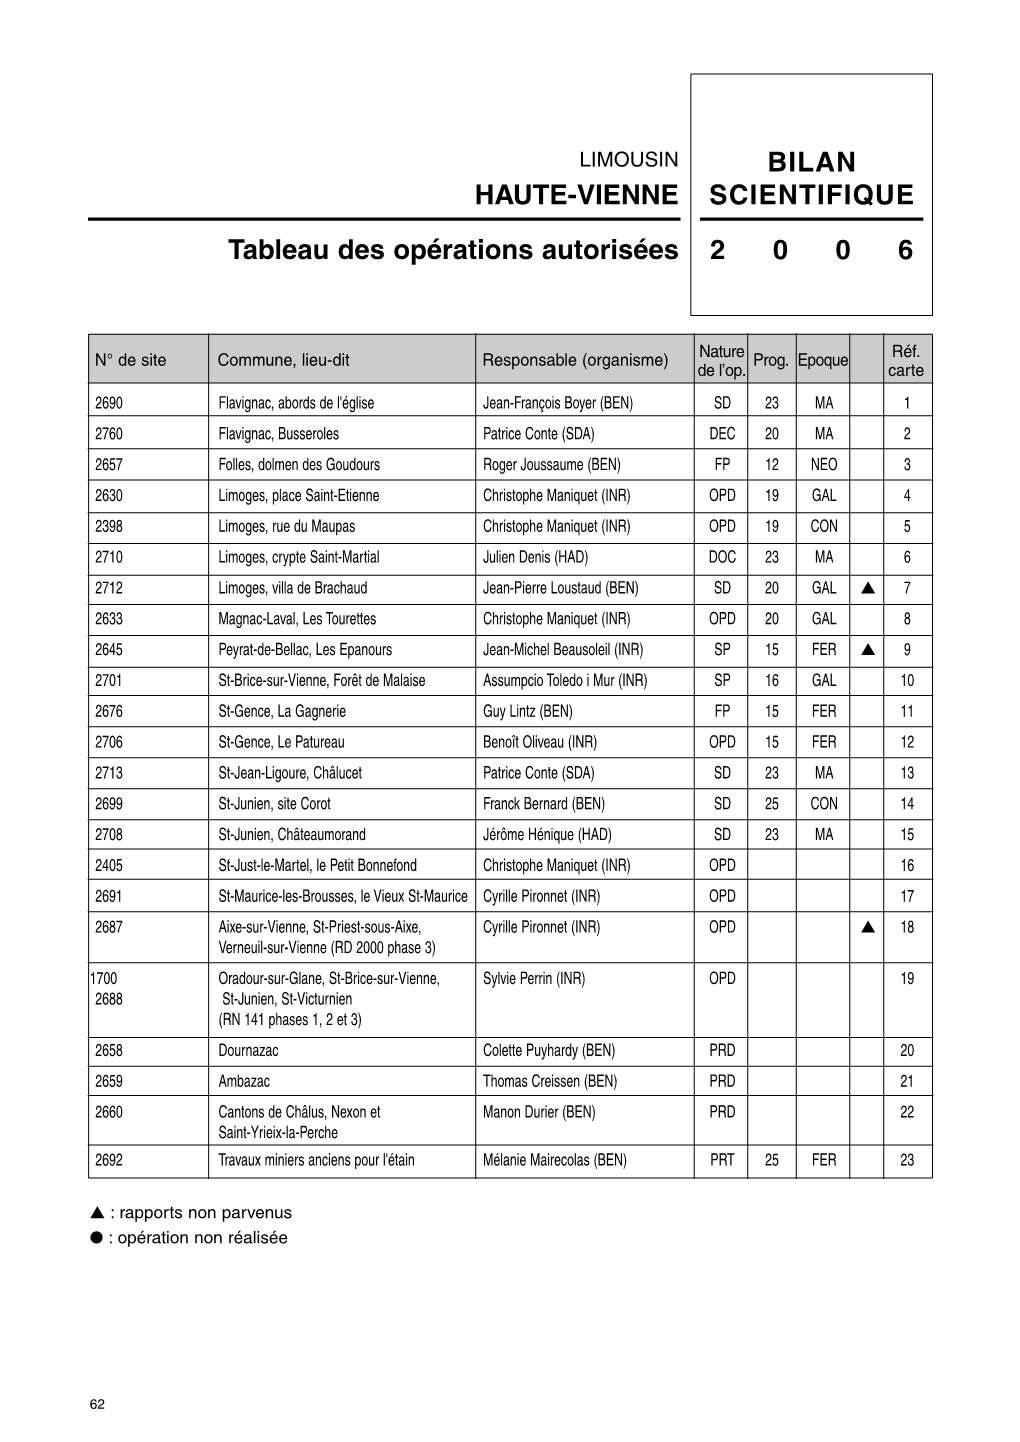 BSR 2006 Haute-Vienne PDF 1 MO